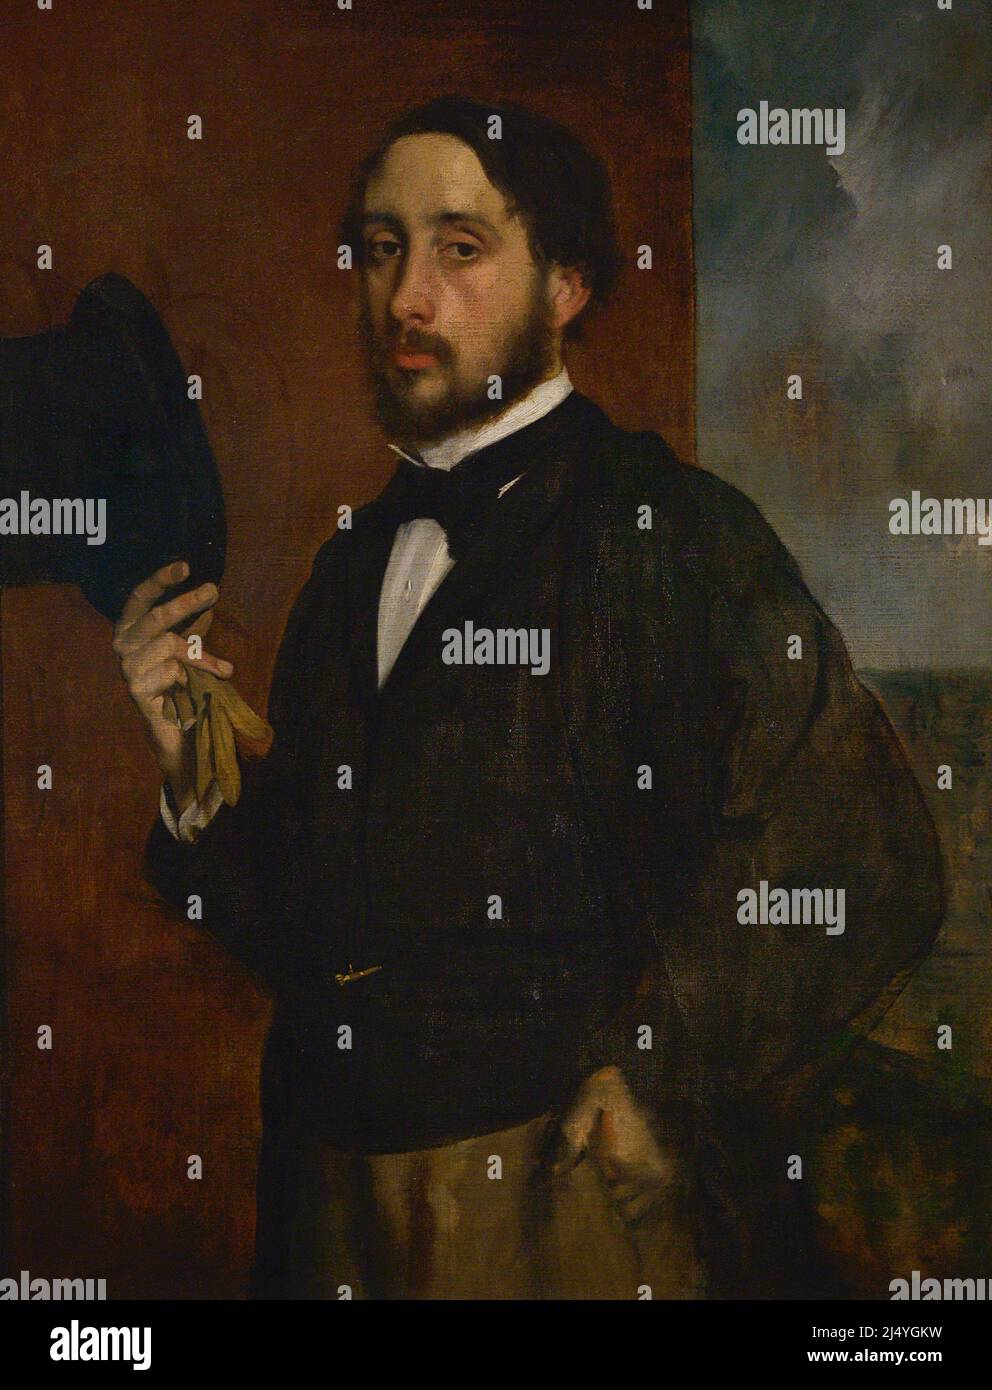 Edgar Degas (1834-1917). French Impressionist painter. Self-portrait or Degas saluting, ca.1863. Oil on canvas. Calouste Gulbenkian Museum. Lisbon. Portugal. Stock Photo